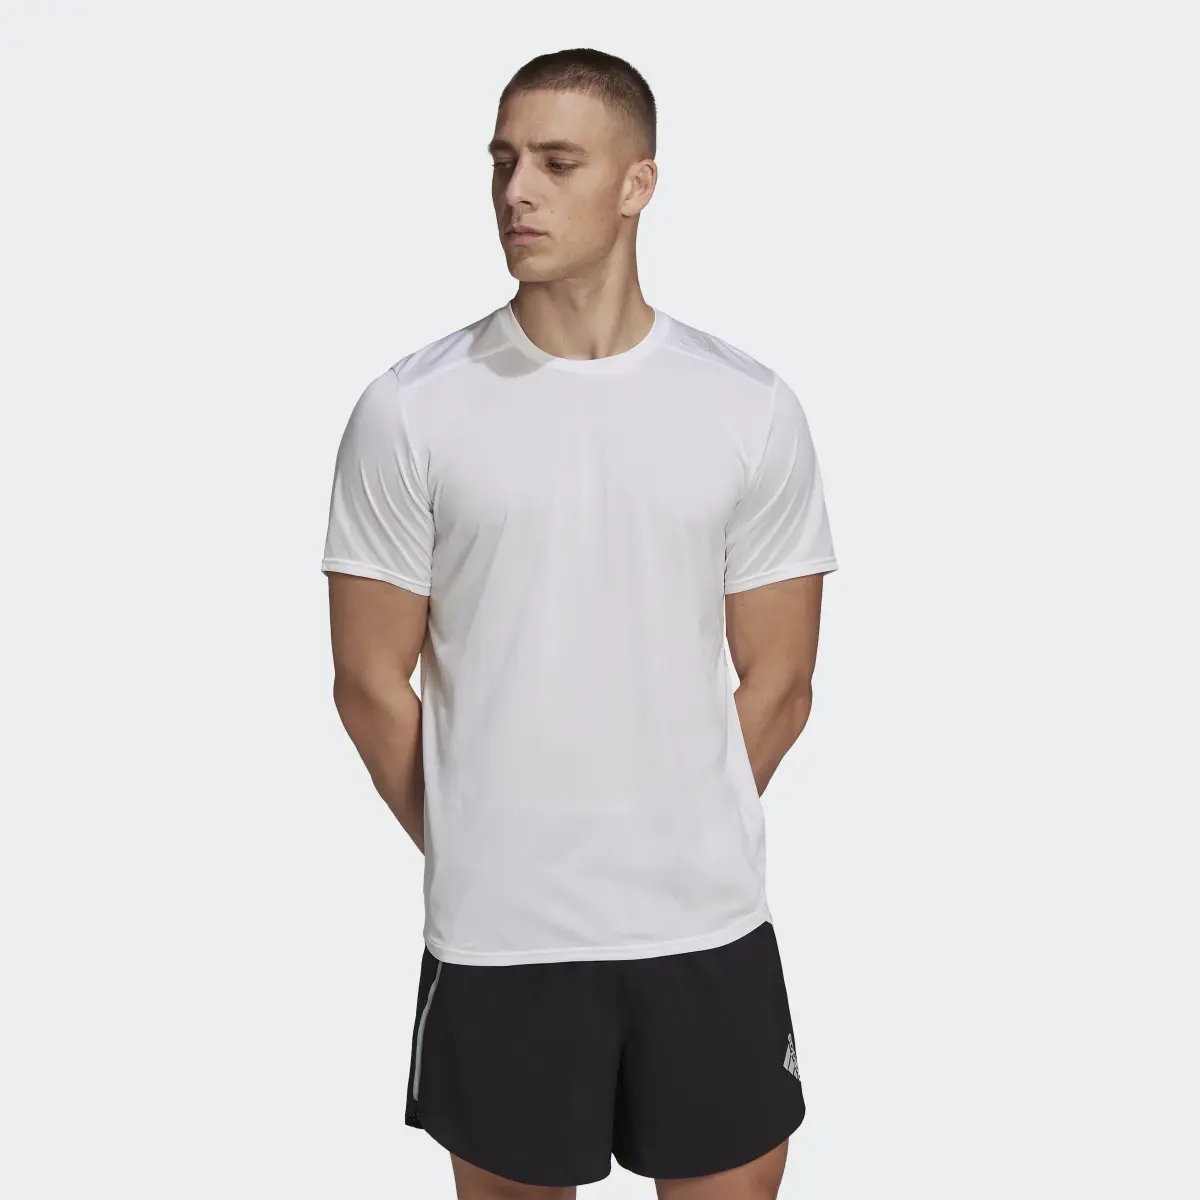 Adidas Designed 4 Running T-Shirt. 2